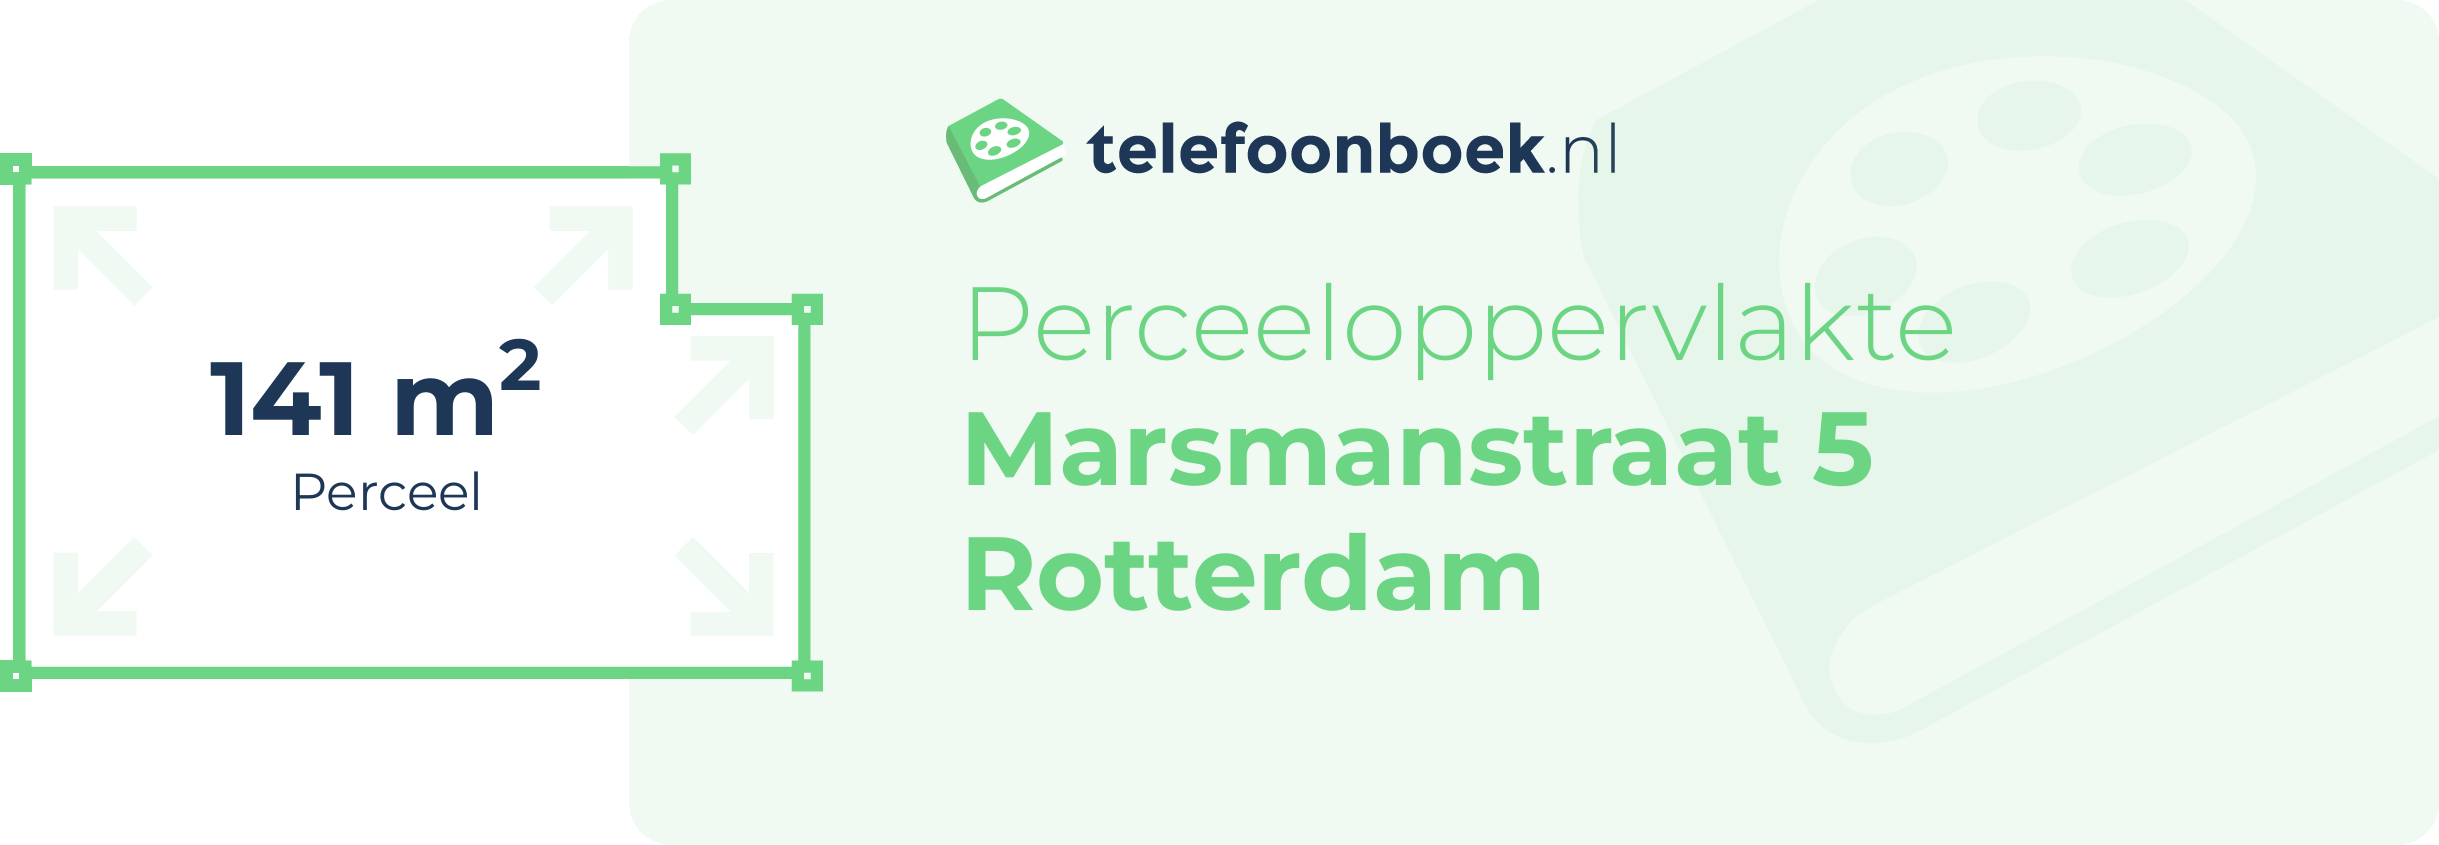 Perceeloppervlakte Marsmanstraat 5 Rotterdam